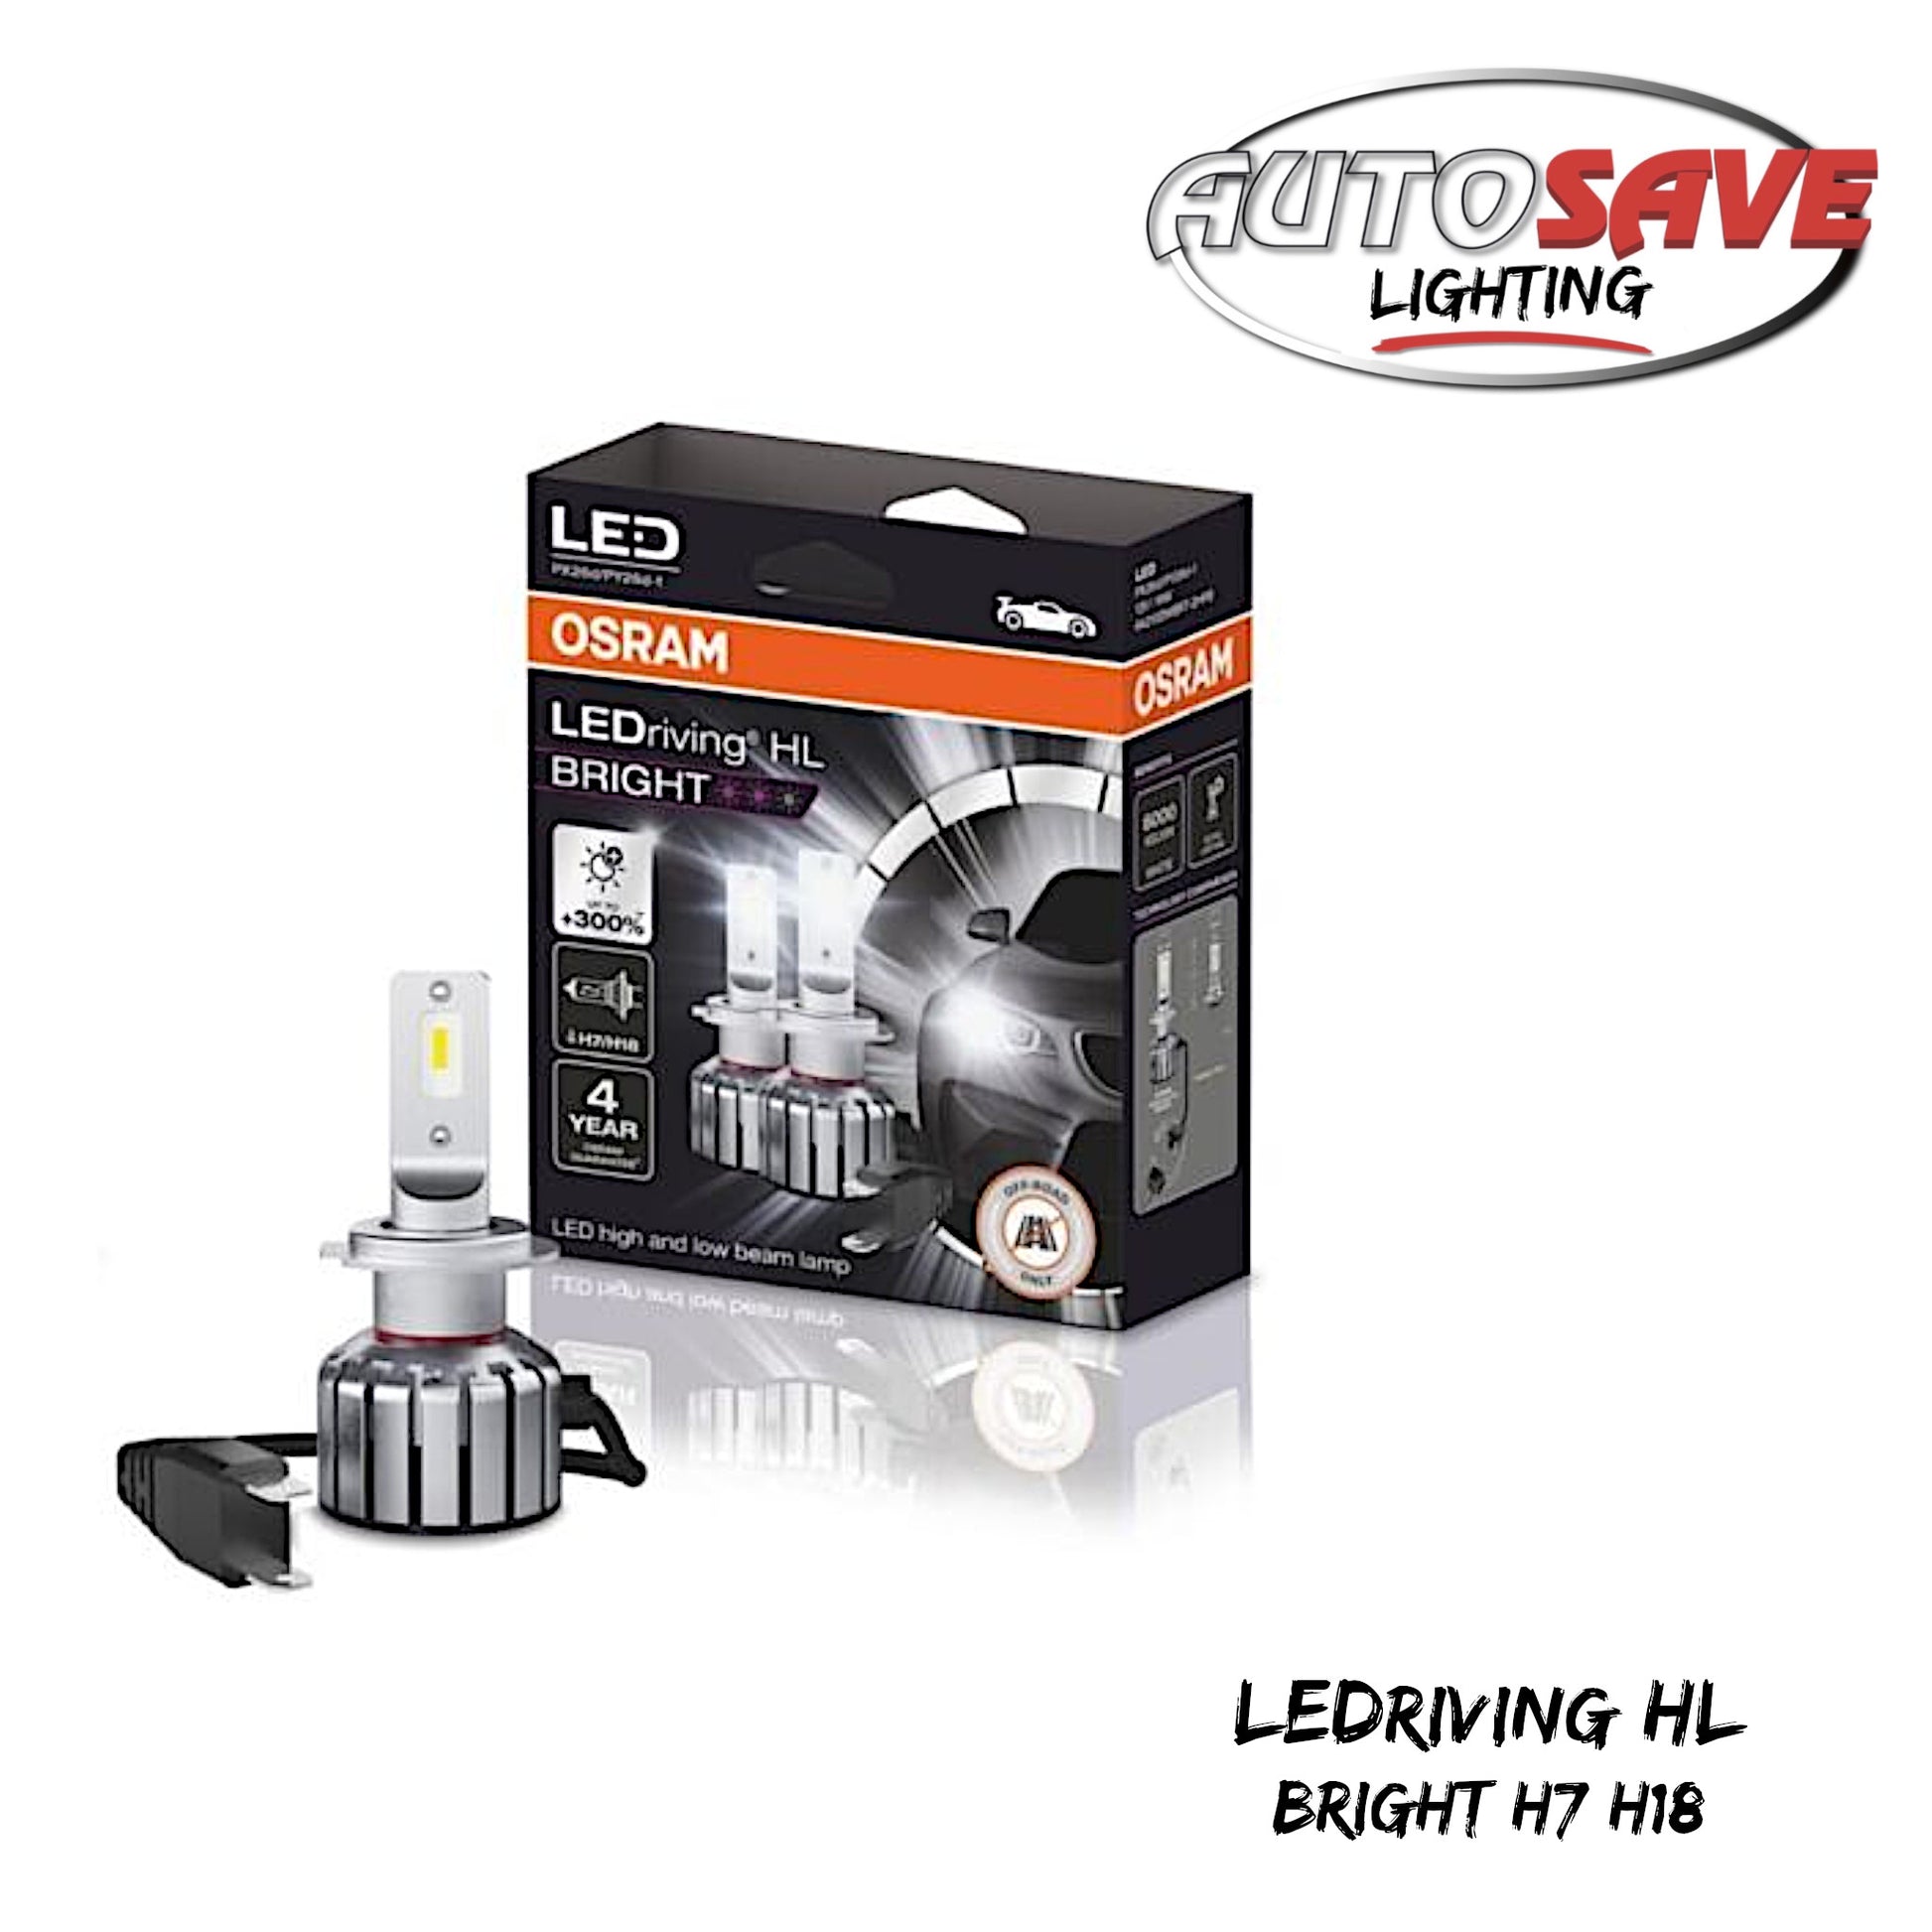 Ampoule LED OSRAM LEDriving HL BRIGHT H7/H18